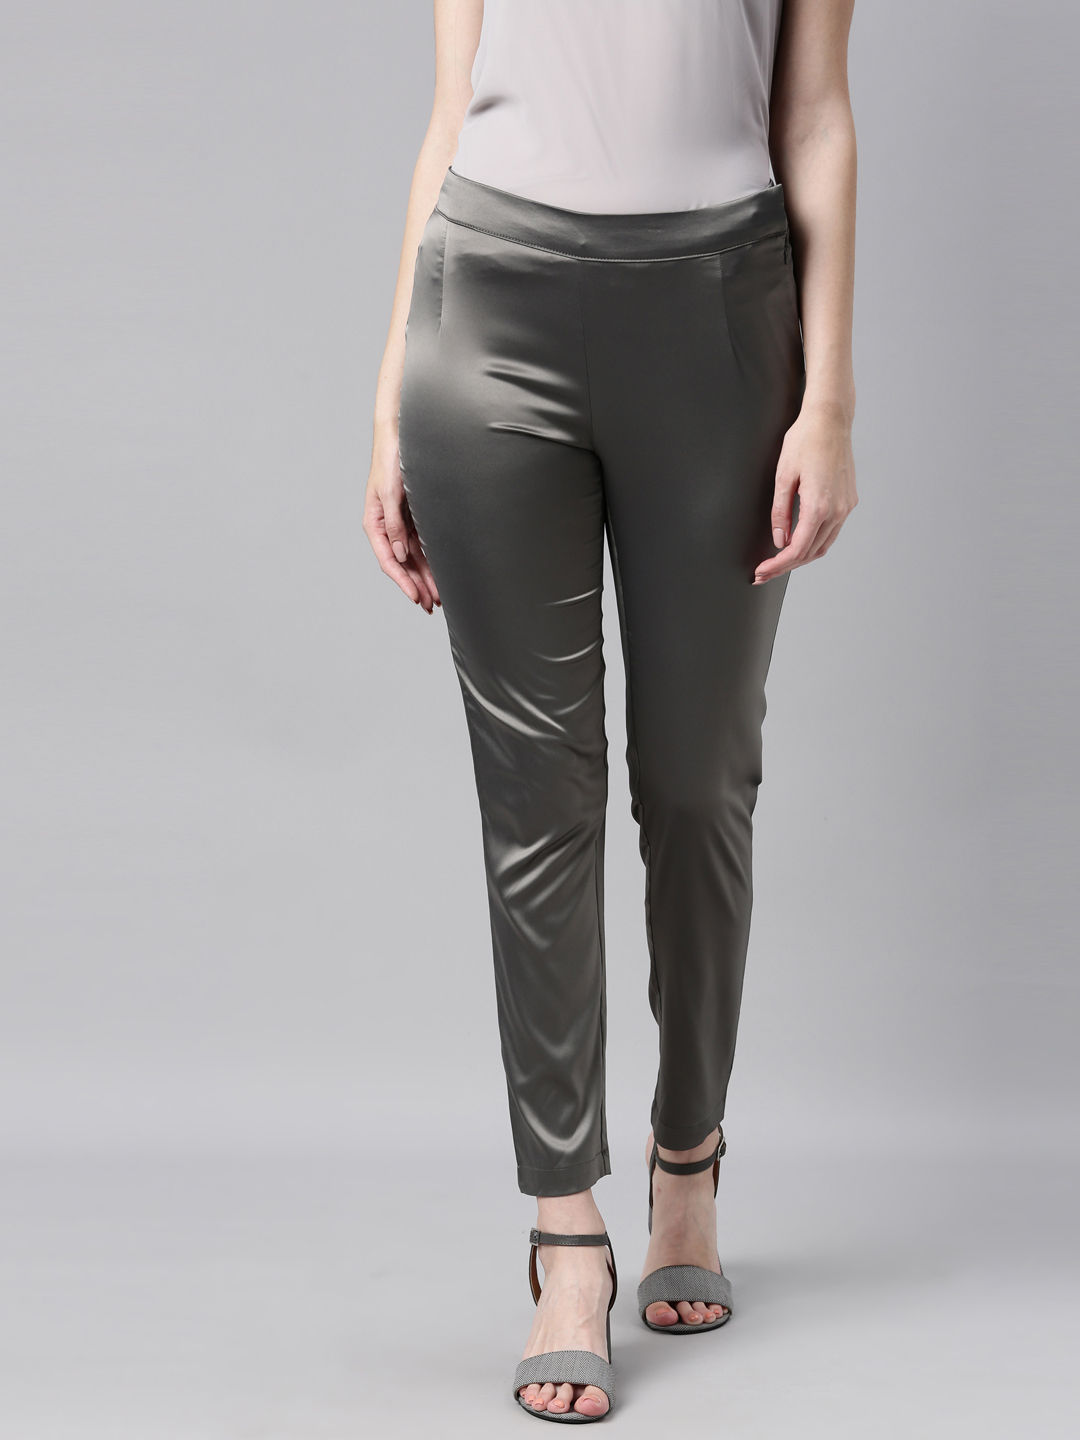 Liquid Satin Pant  Silver  Pants  Full Length  Womens Clothing  Storm